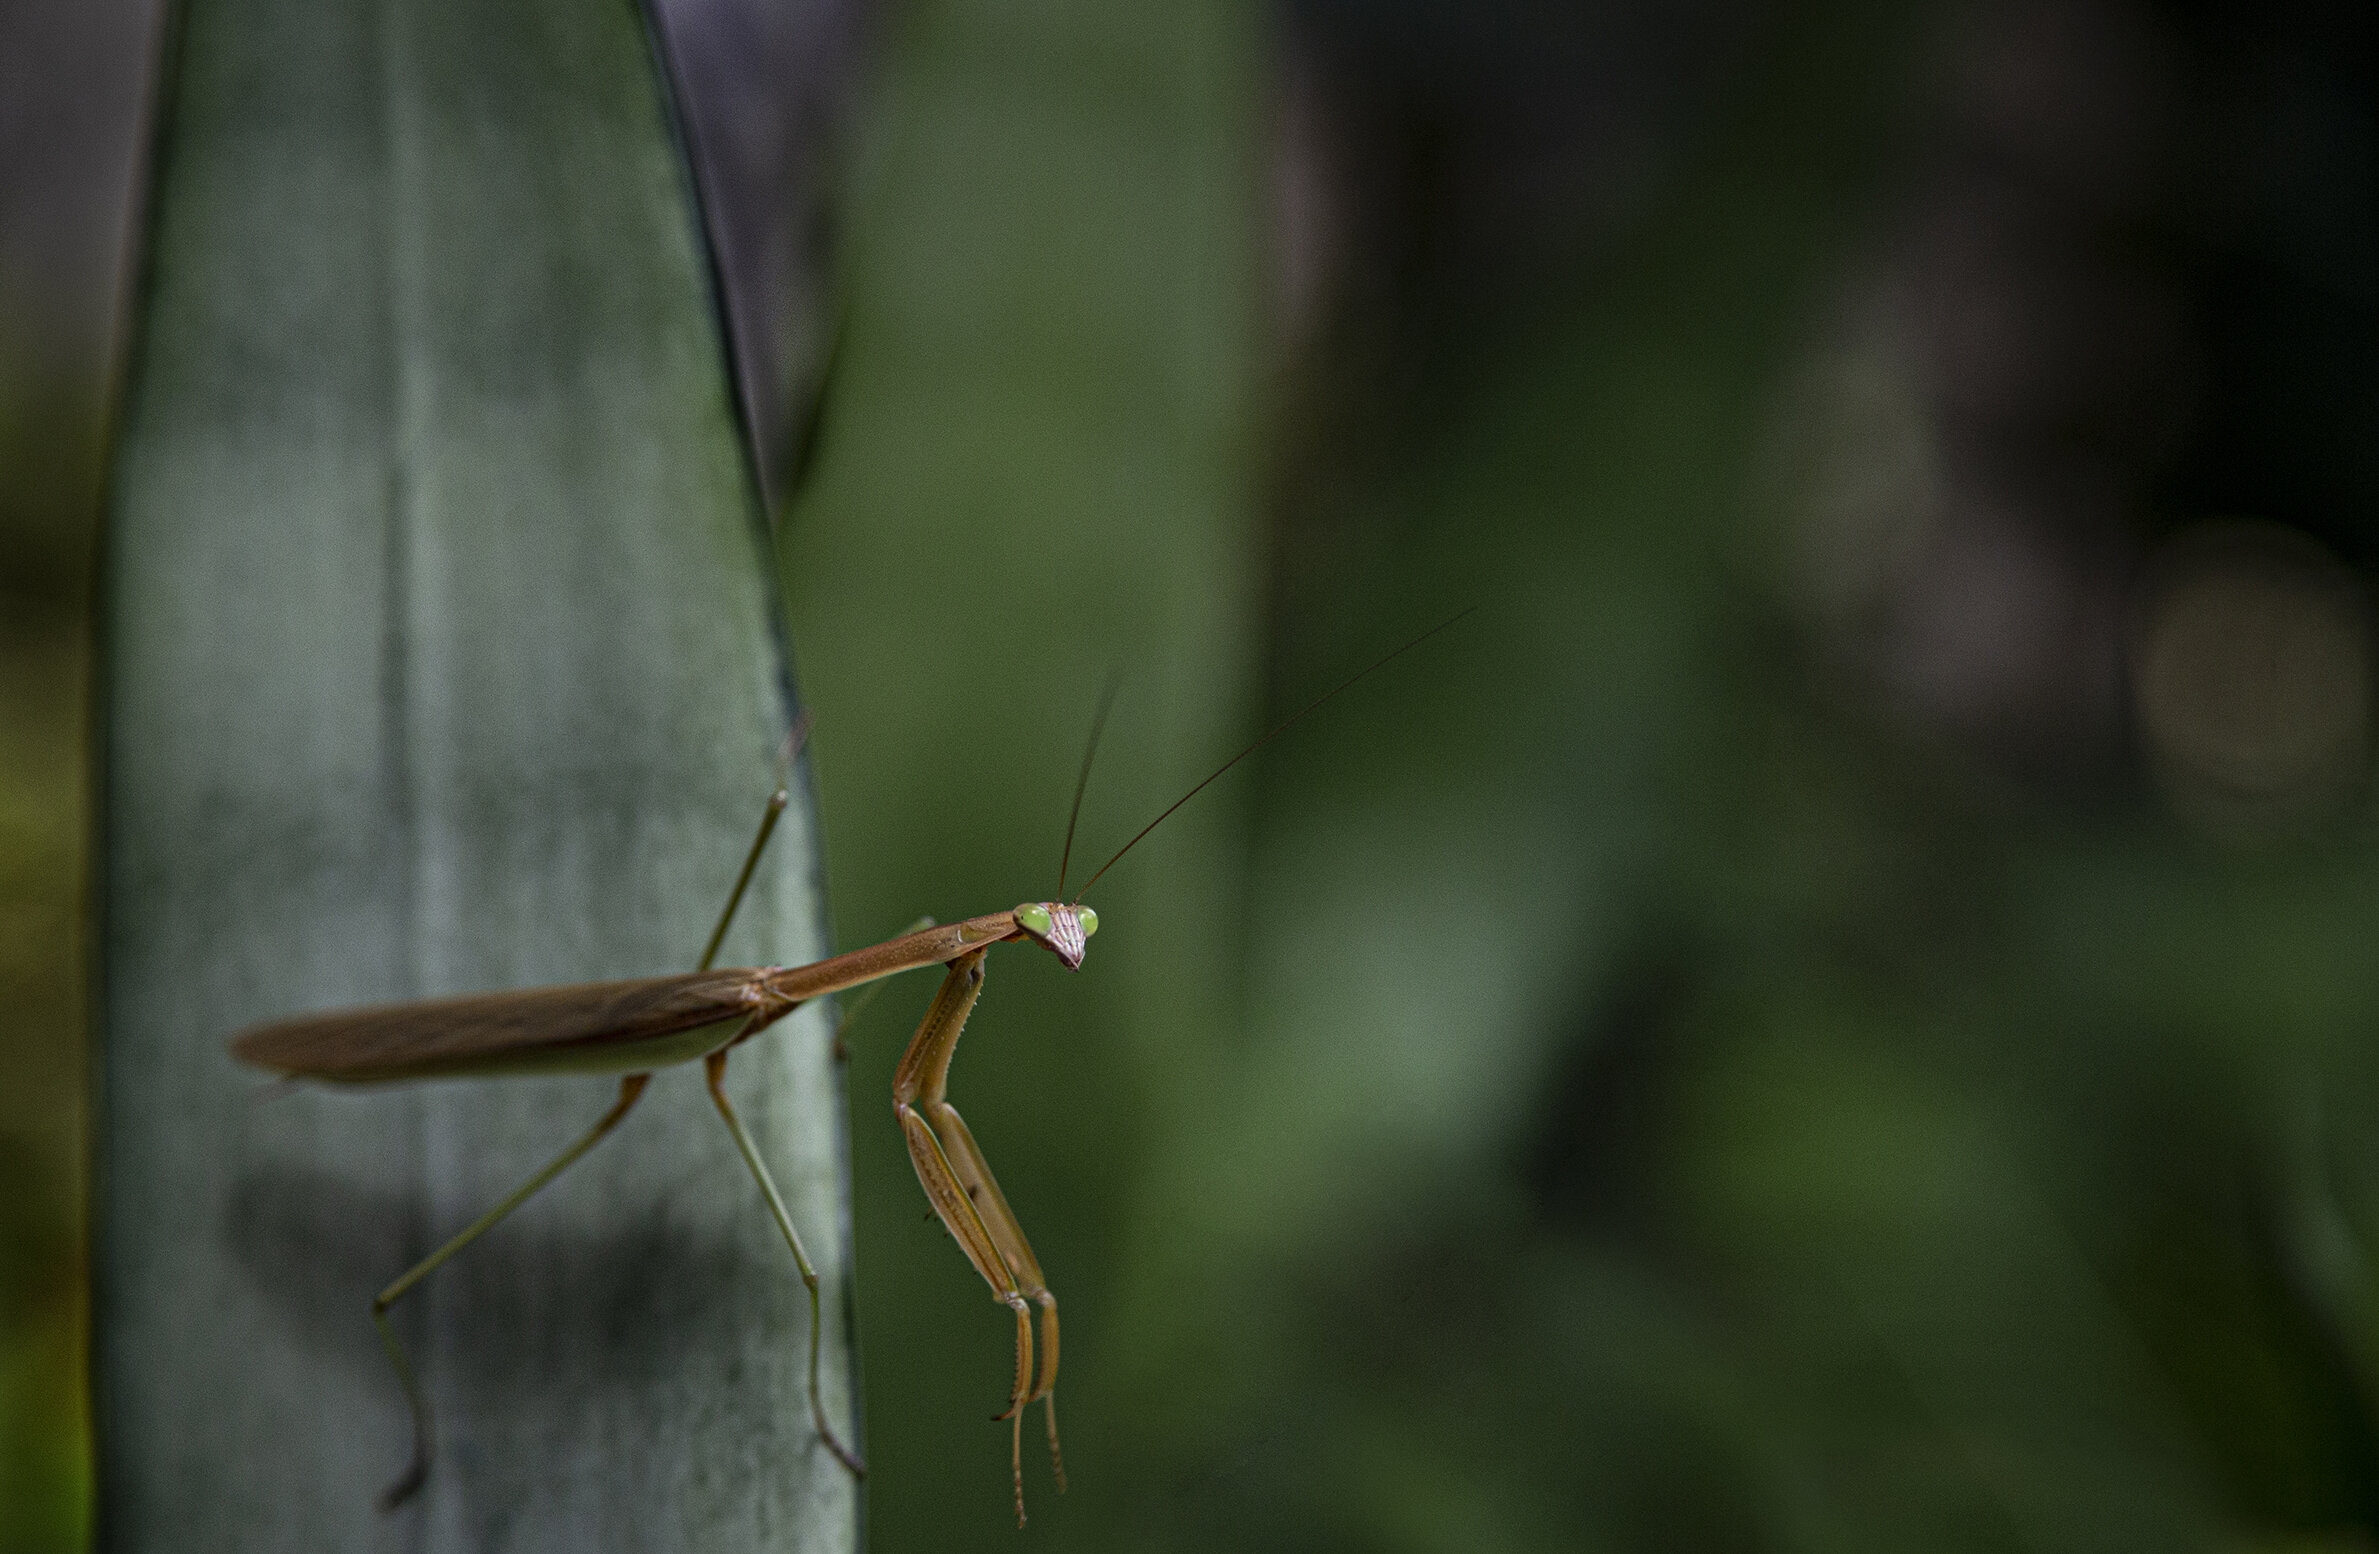  A praying mantis at Longwood Gardens, Pennsylvania 